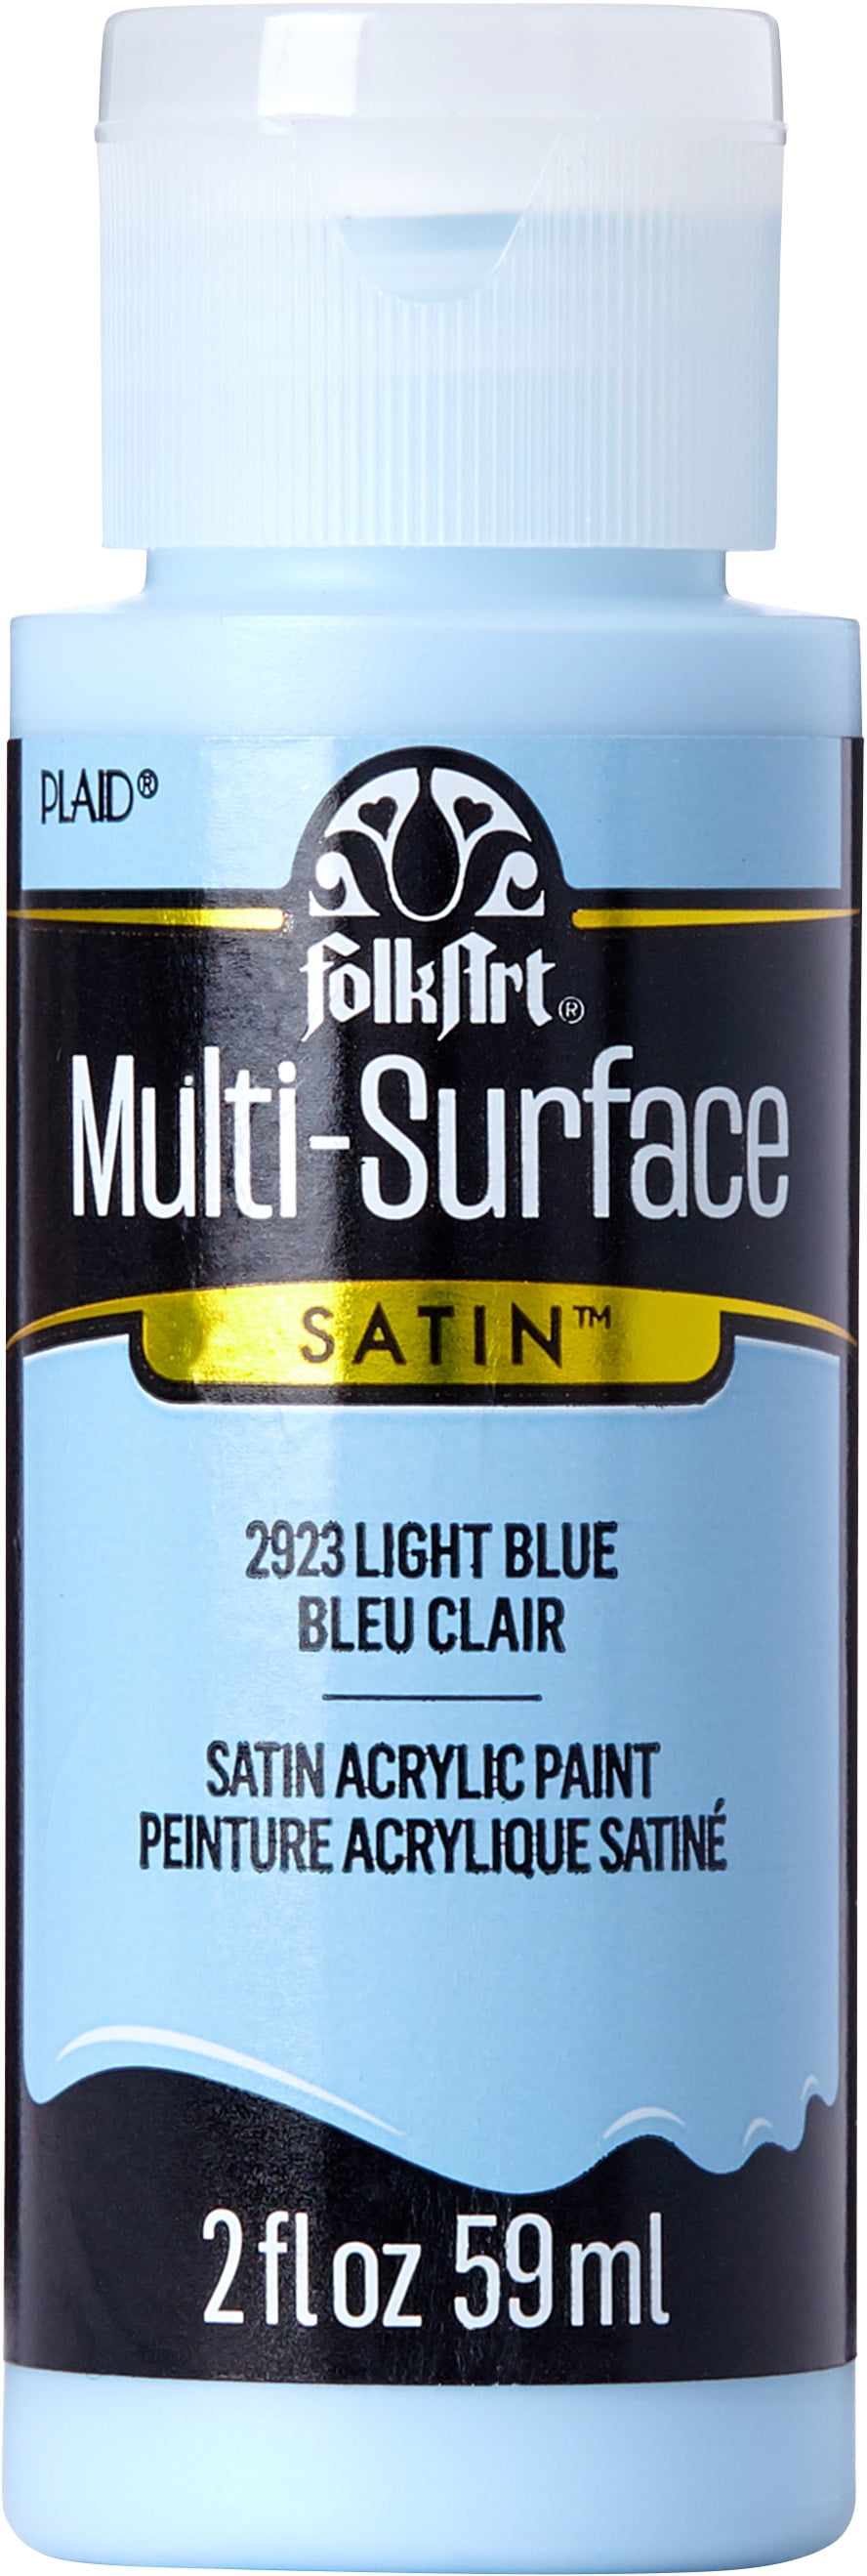 Multi-Surface Metallic Acrylic Paint 2 oz in Platinum by FolkArt